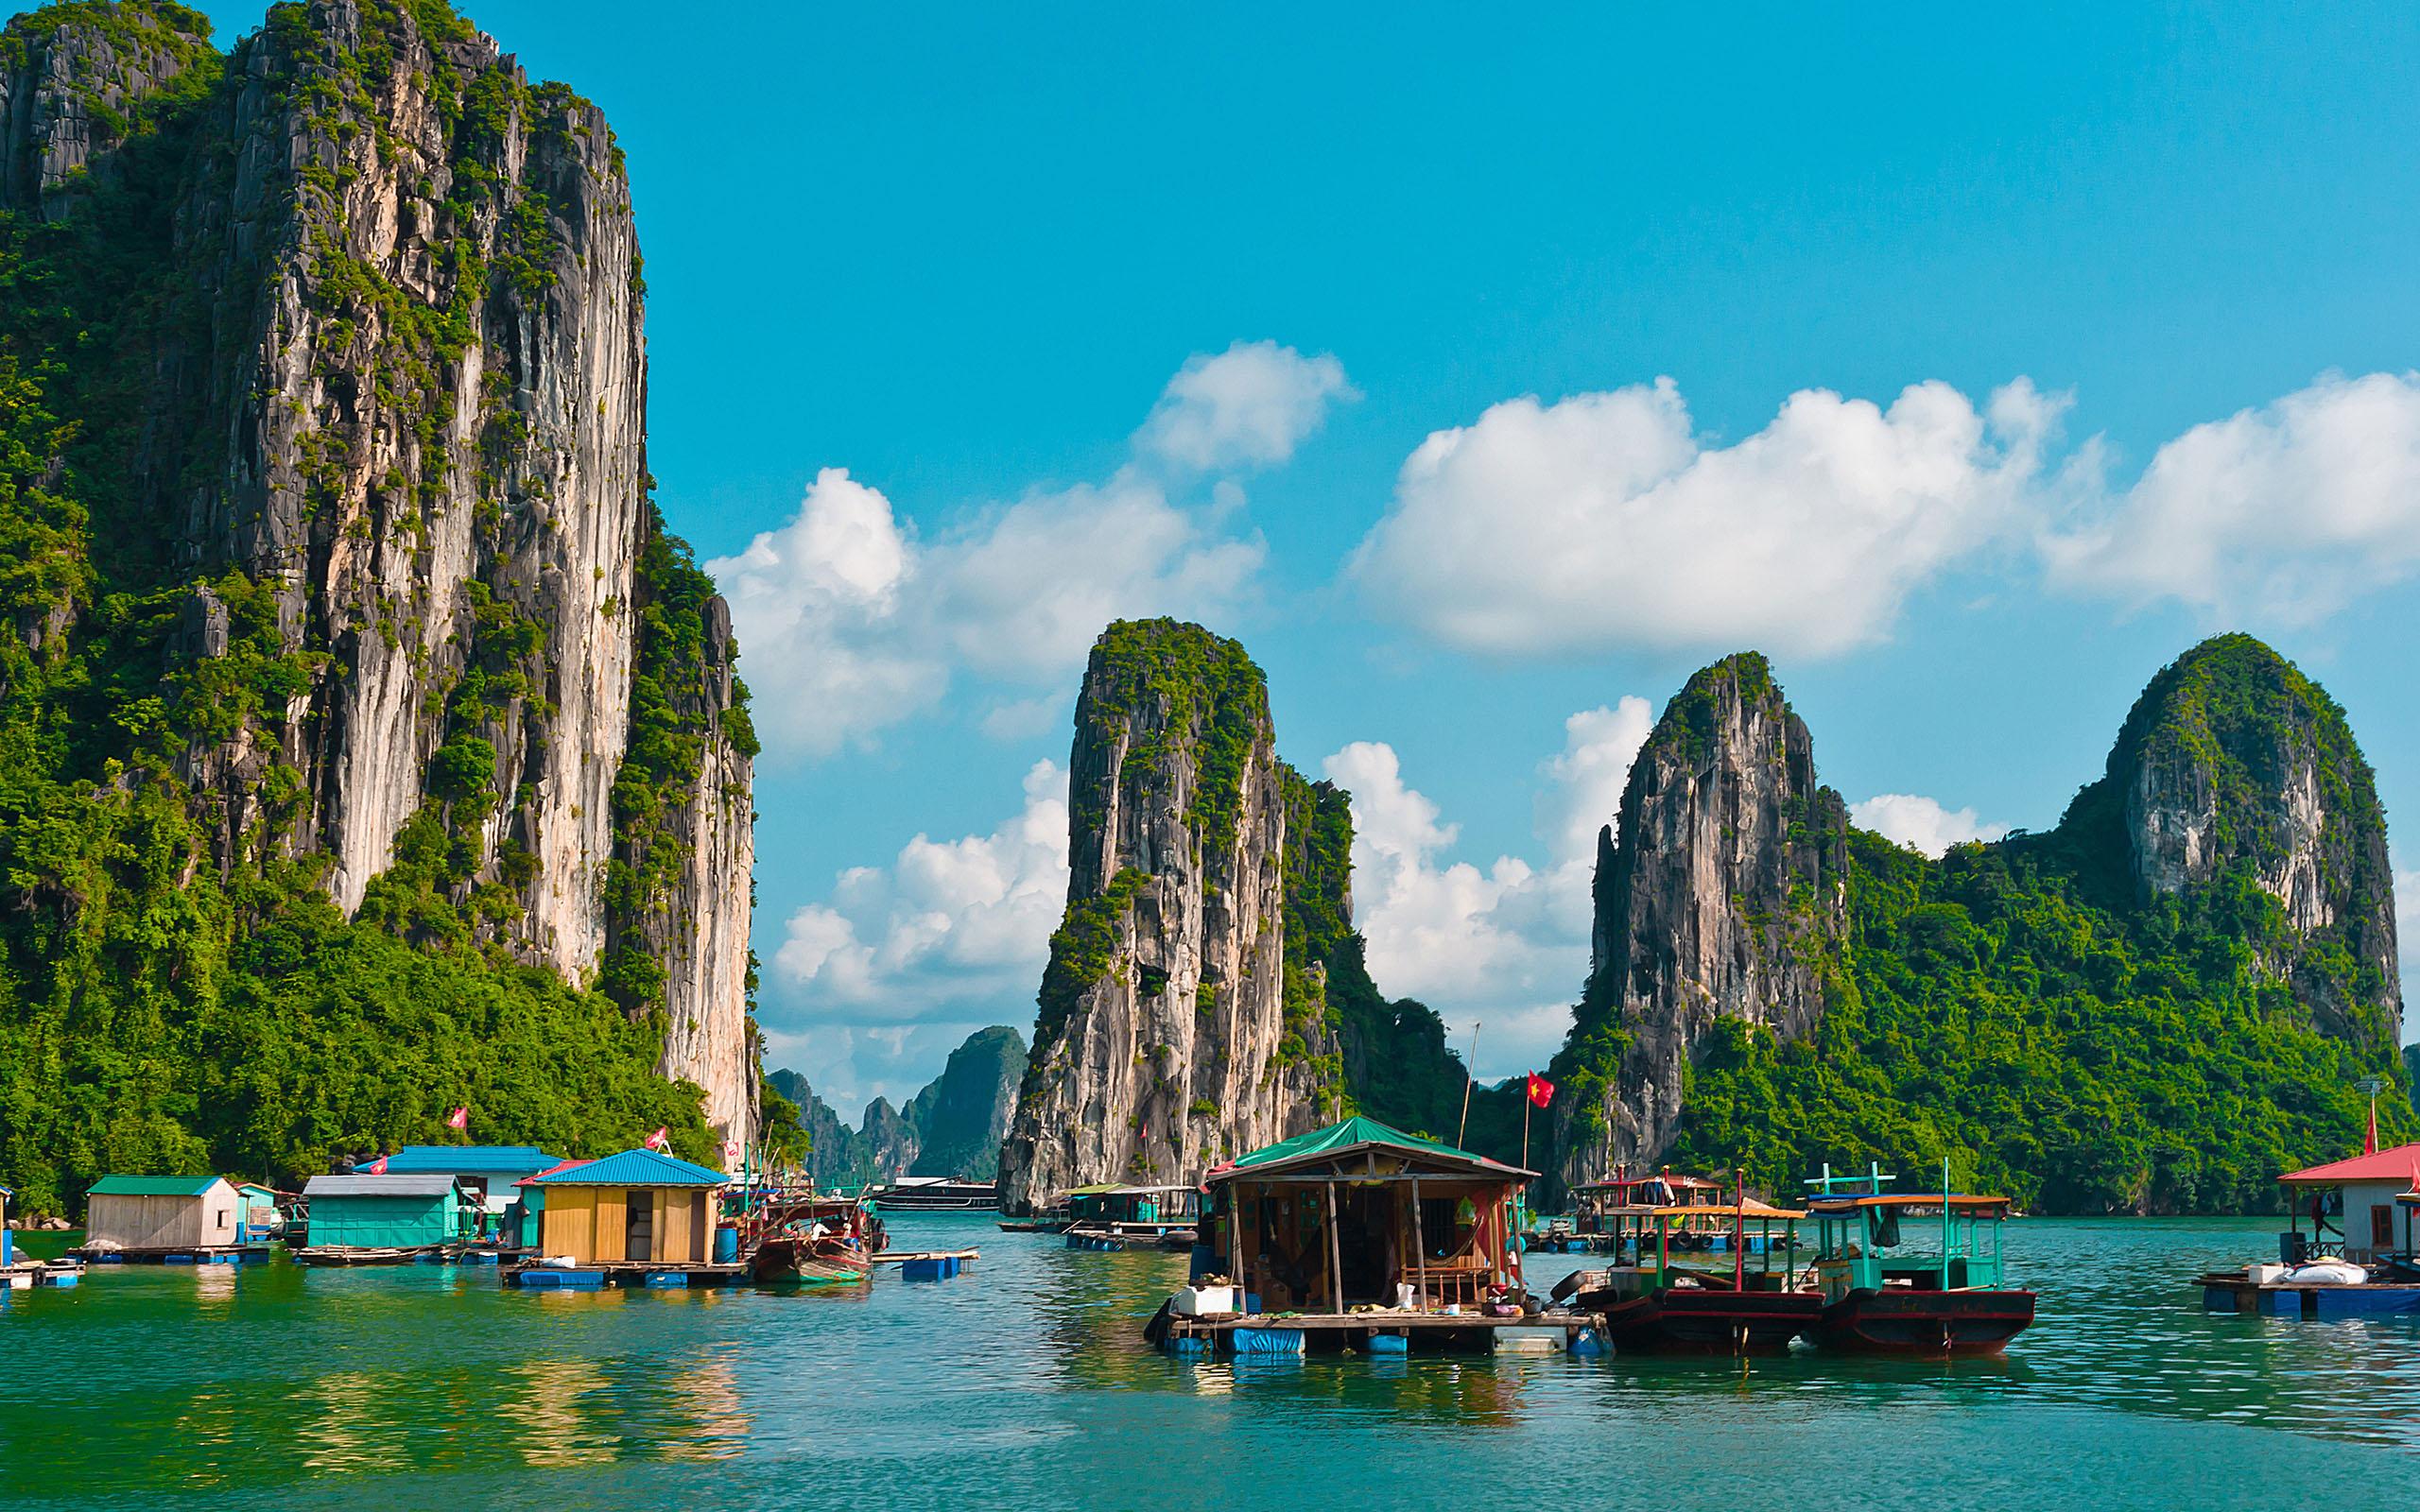 Travel magazine suggests must-see destinations in Vietnam